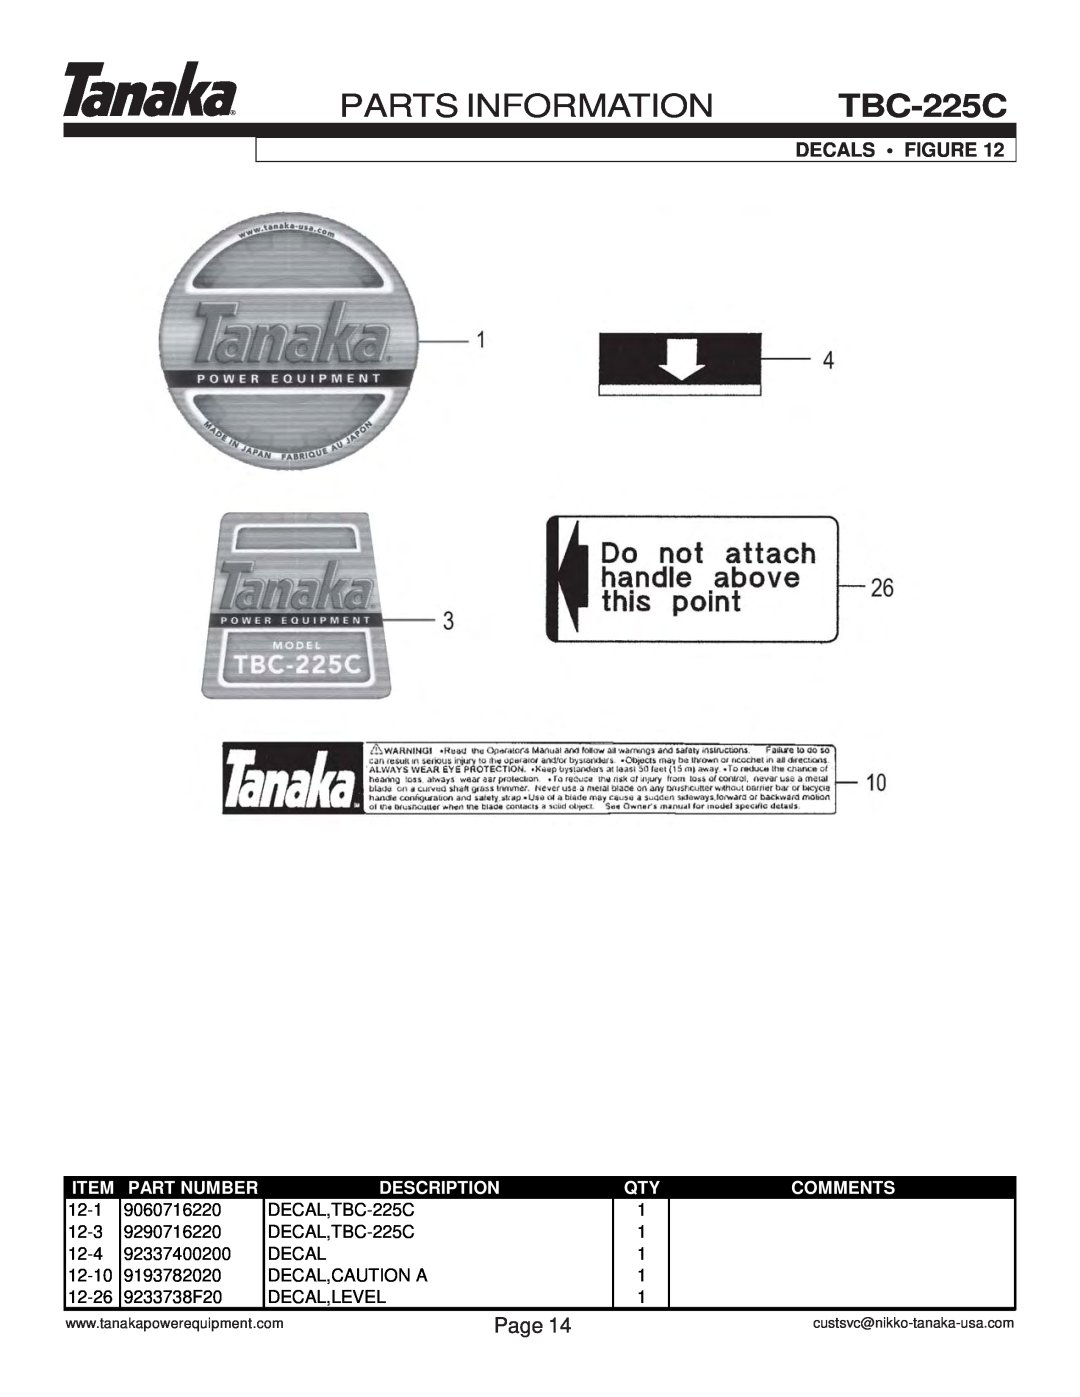 Tanaka TBC-225C manual Parts Information, Decals Figure, Page, Part Number, Description, Comments 